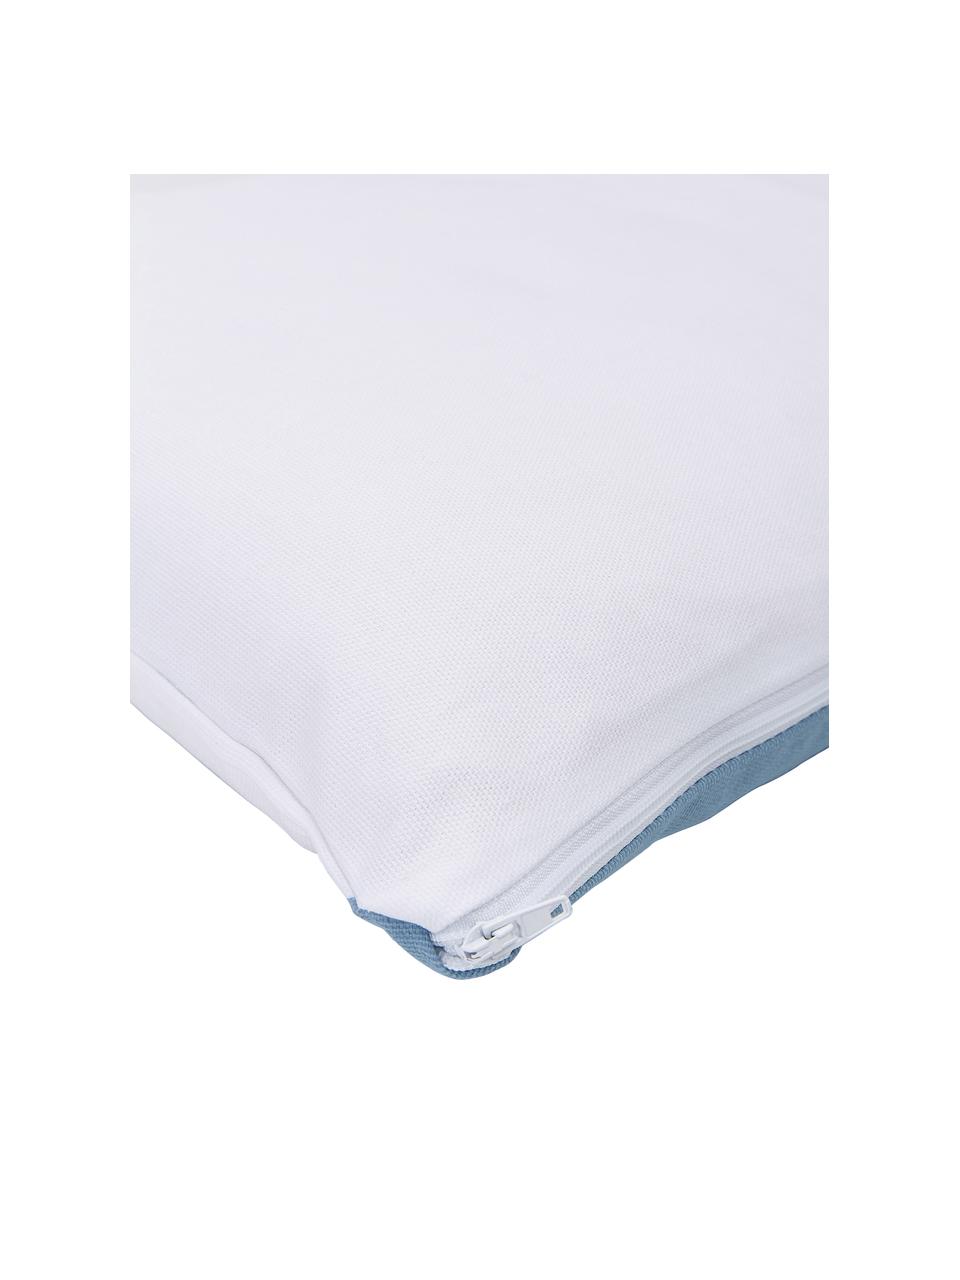 Gestreifte Kissenhülle Ren in Hellblau/White, 100% Baumwolle, Weiss, Hellblau, 30 x 50 cm